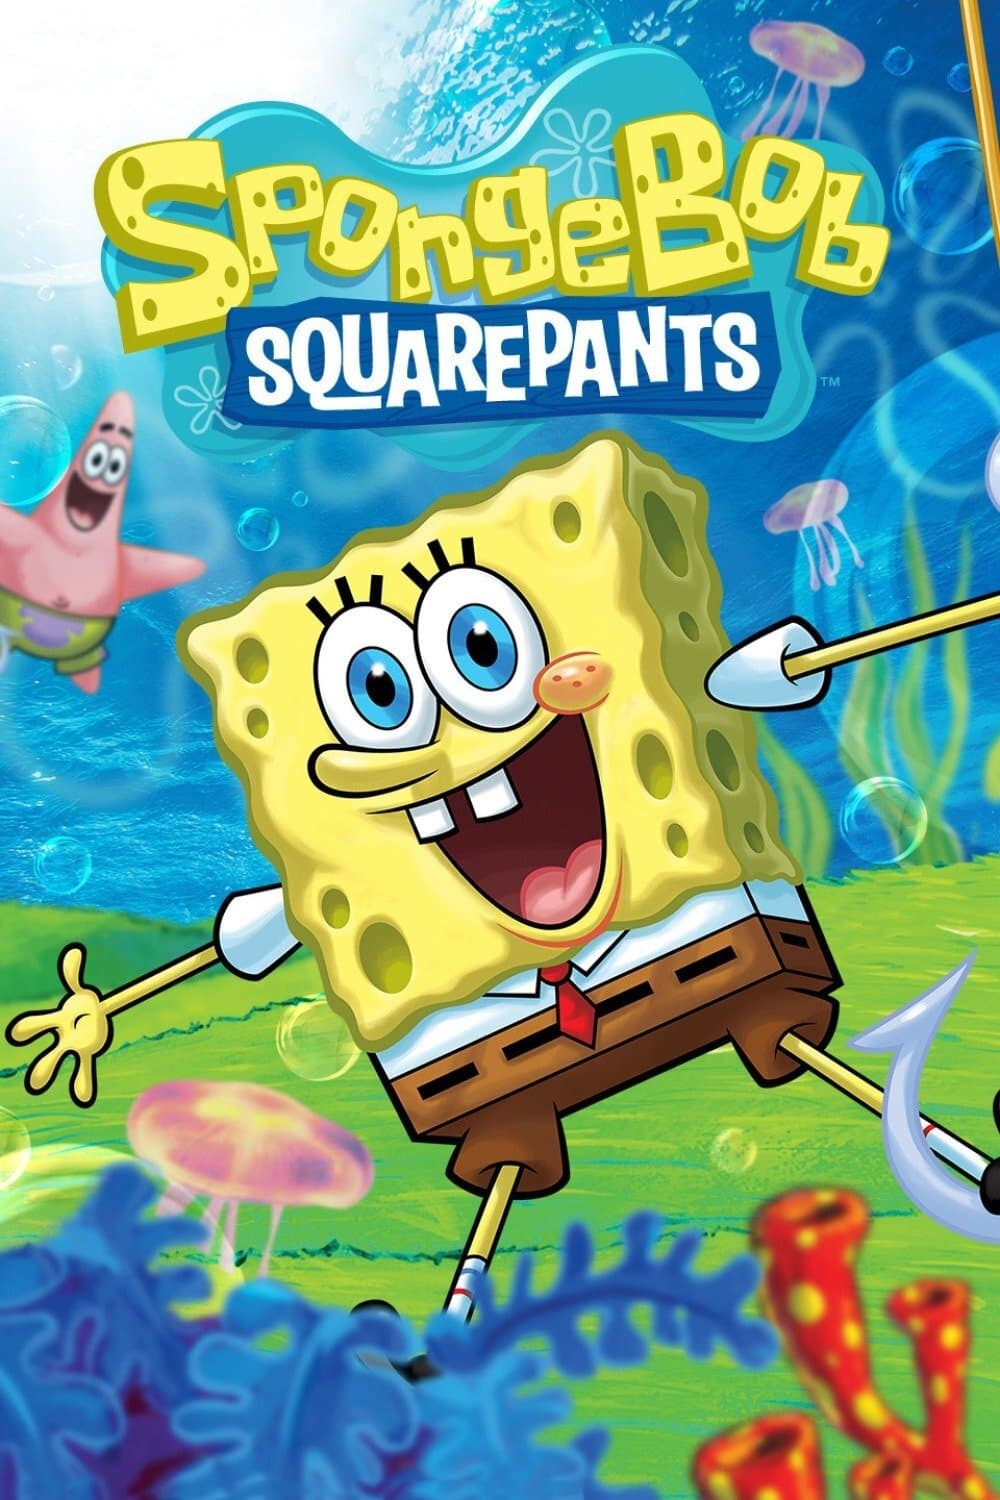 SpongeBob SquarePants TV Shows About Absurd Humor